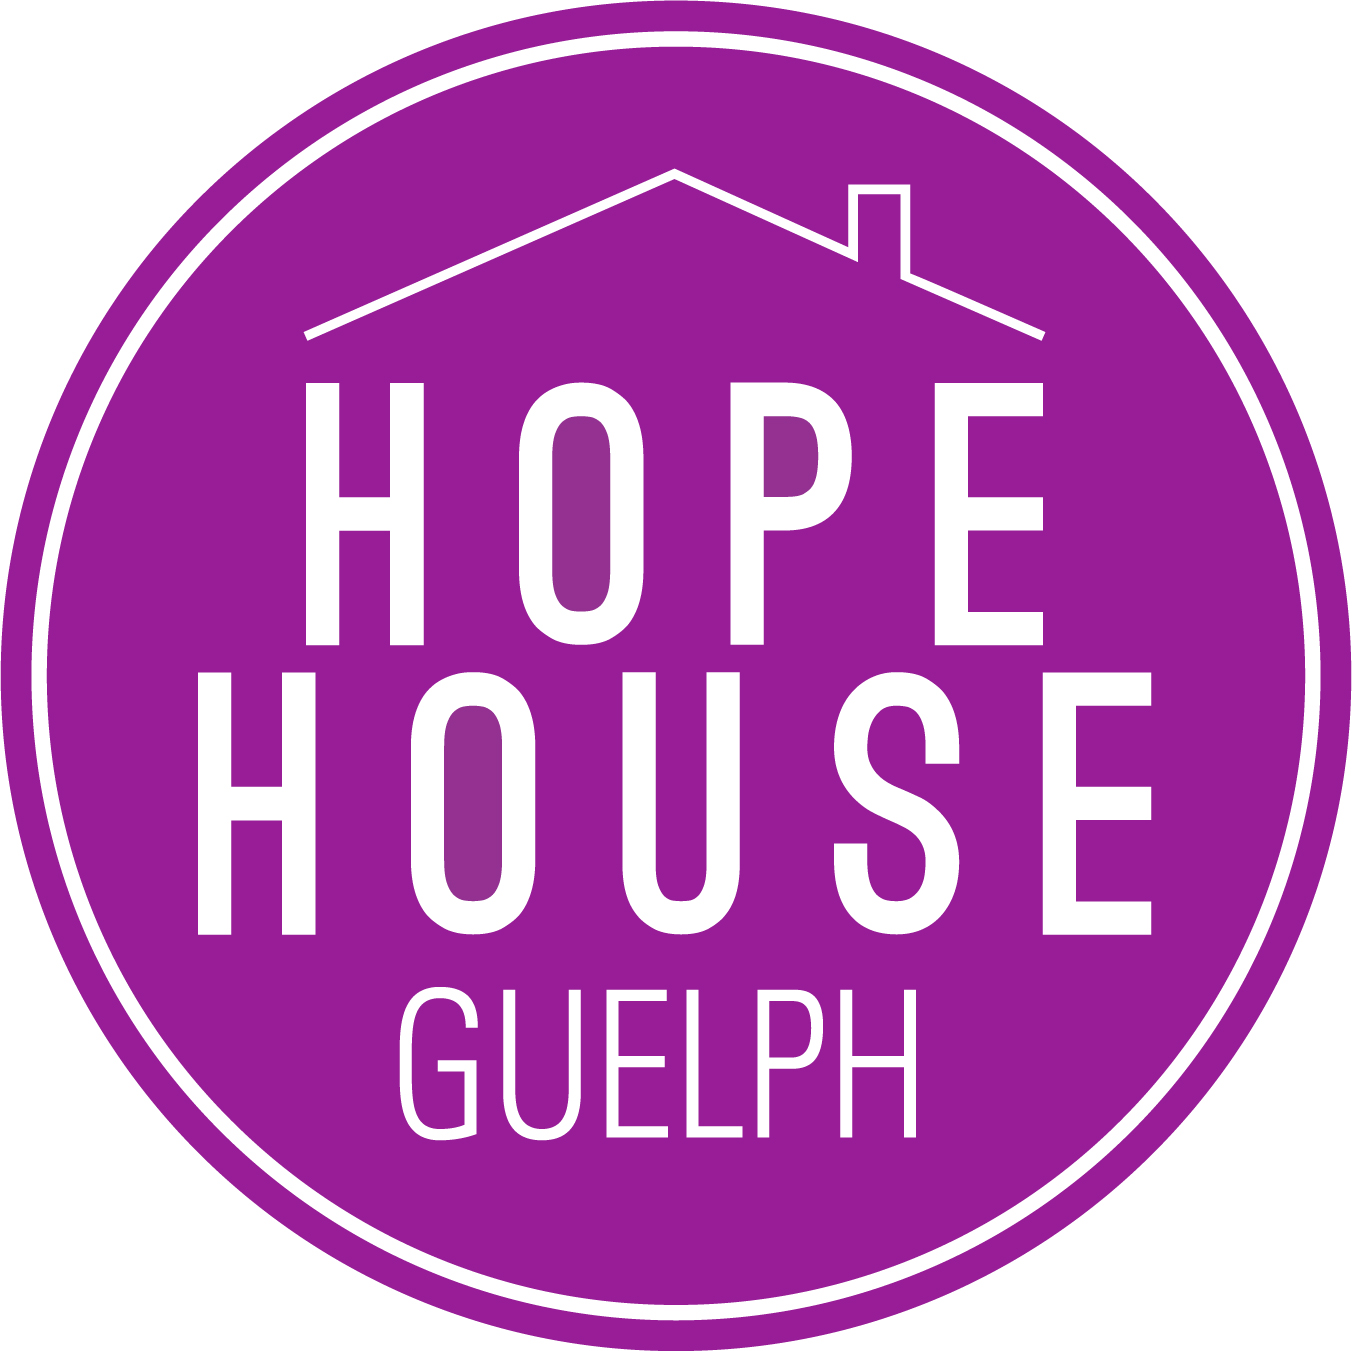 HOPE House Guelph